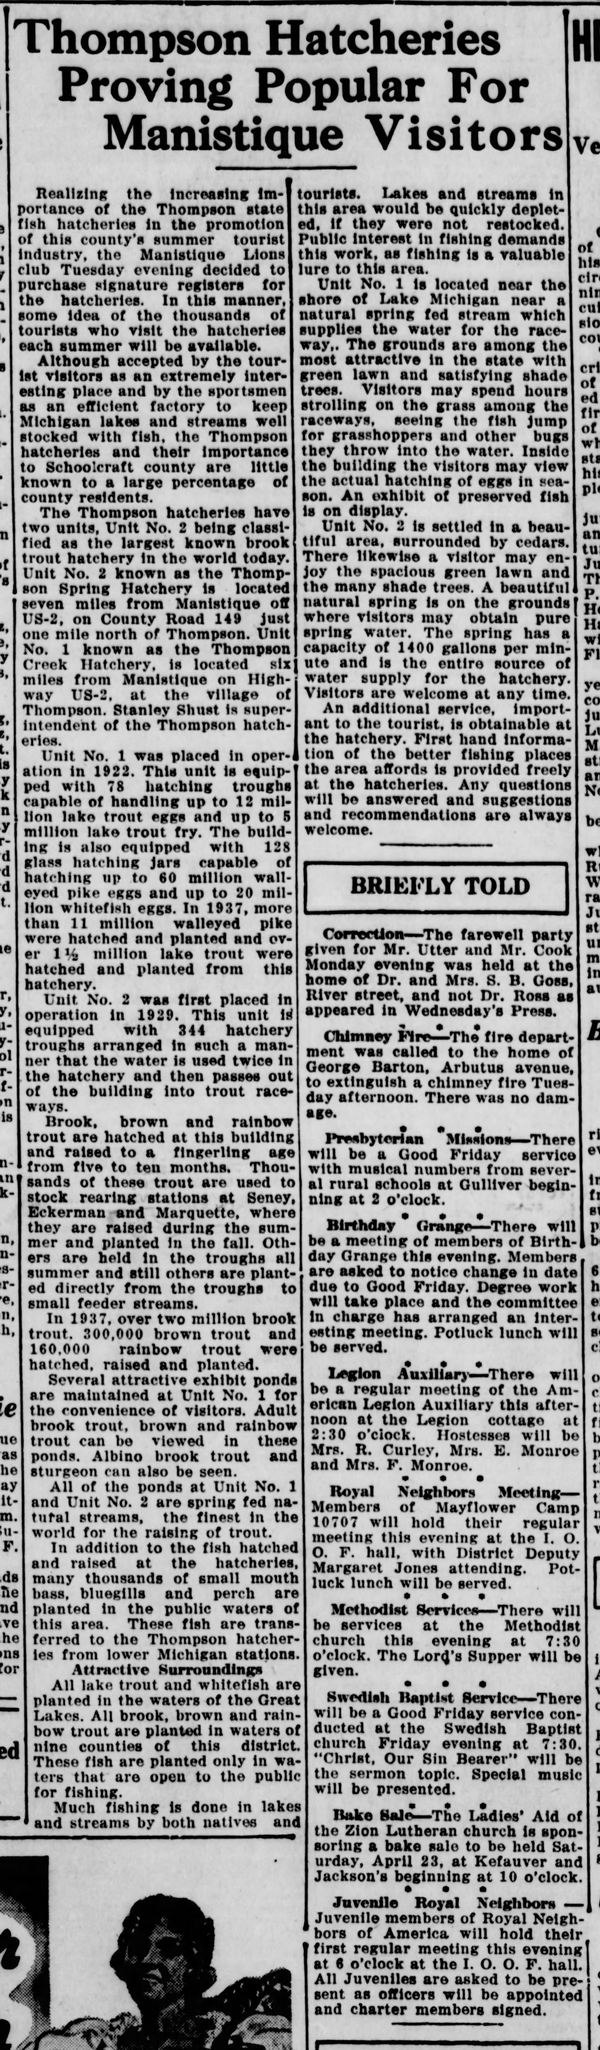 Thompson State Fish Hatchery - Apr 14 1938 Article